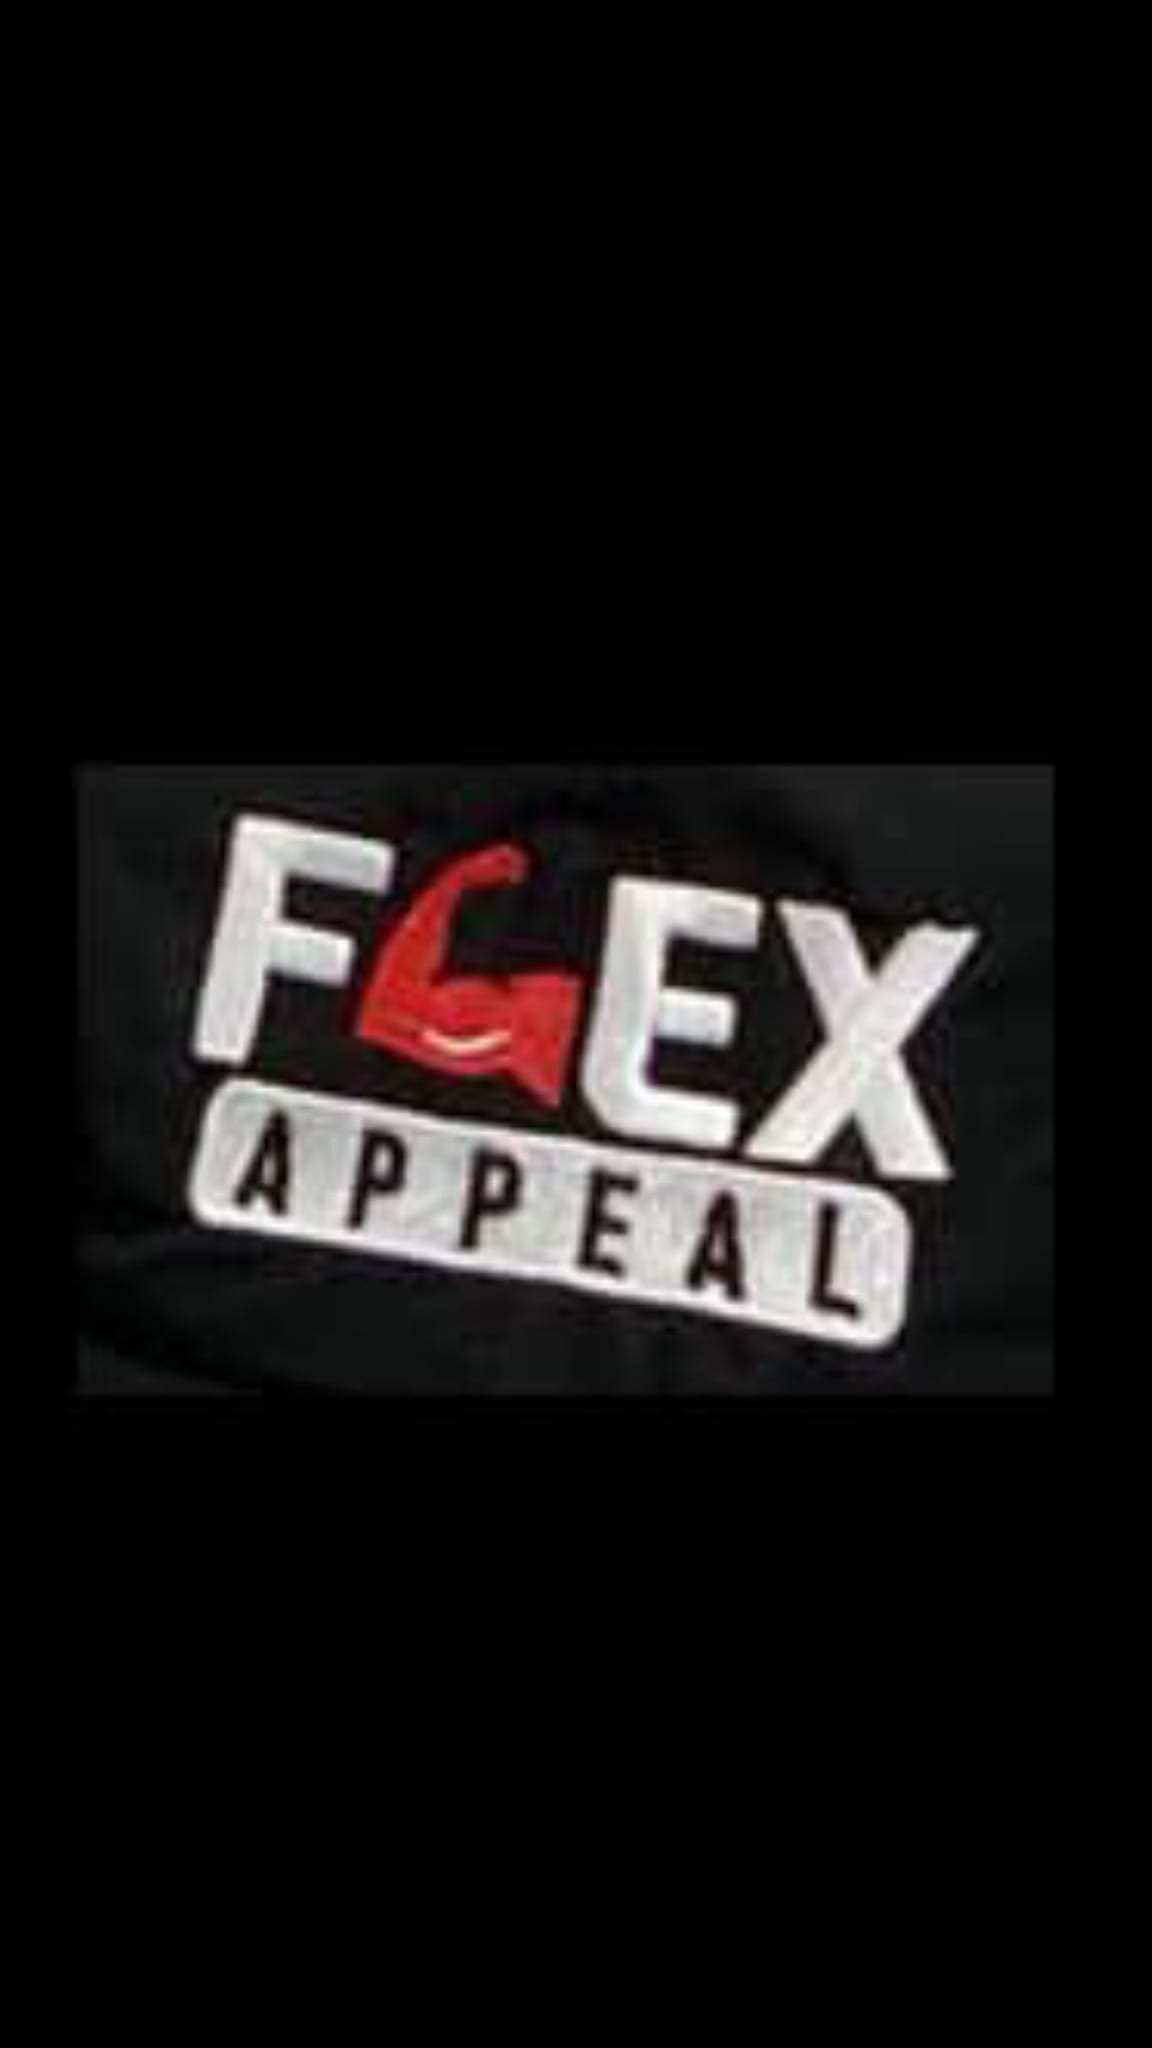 flex appeal logo made